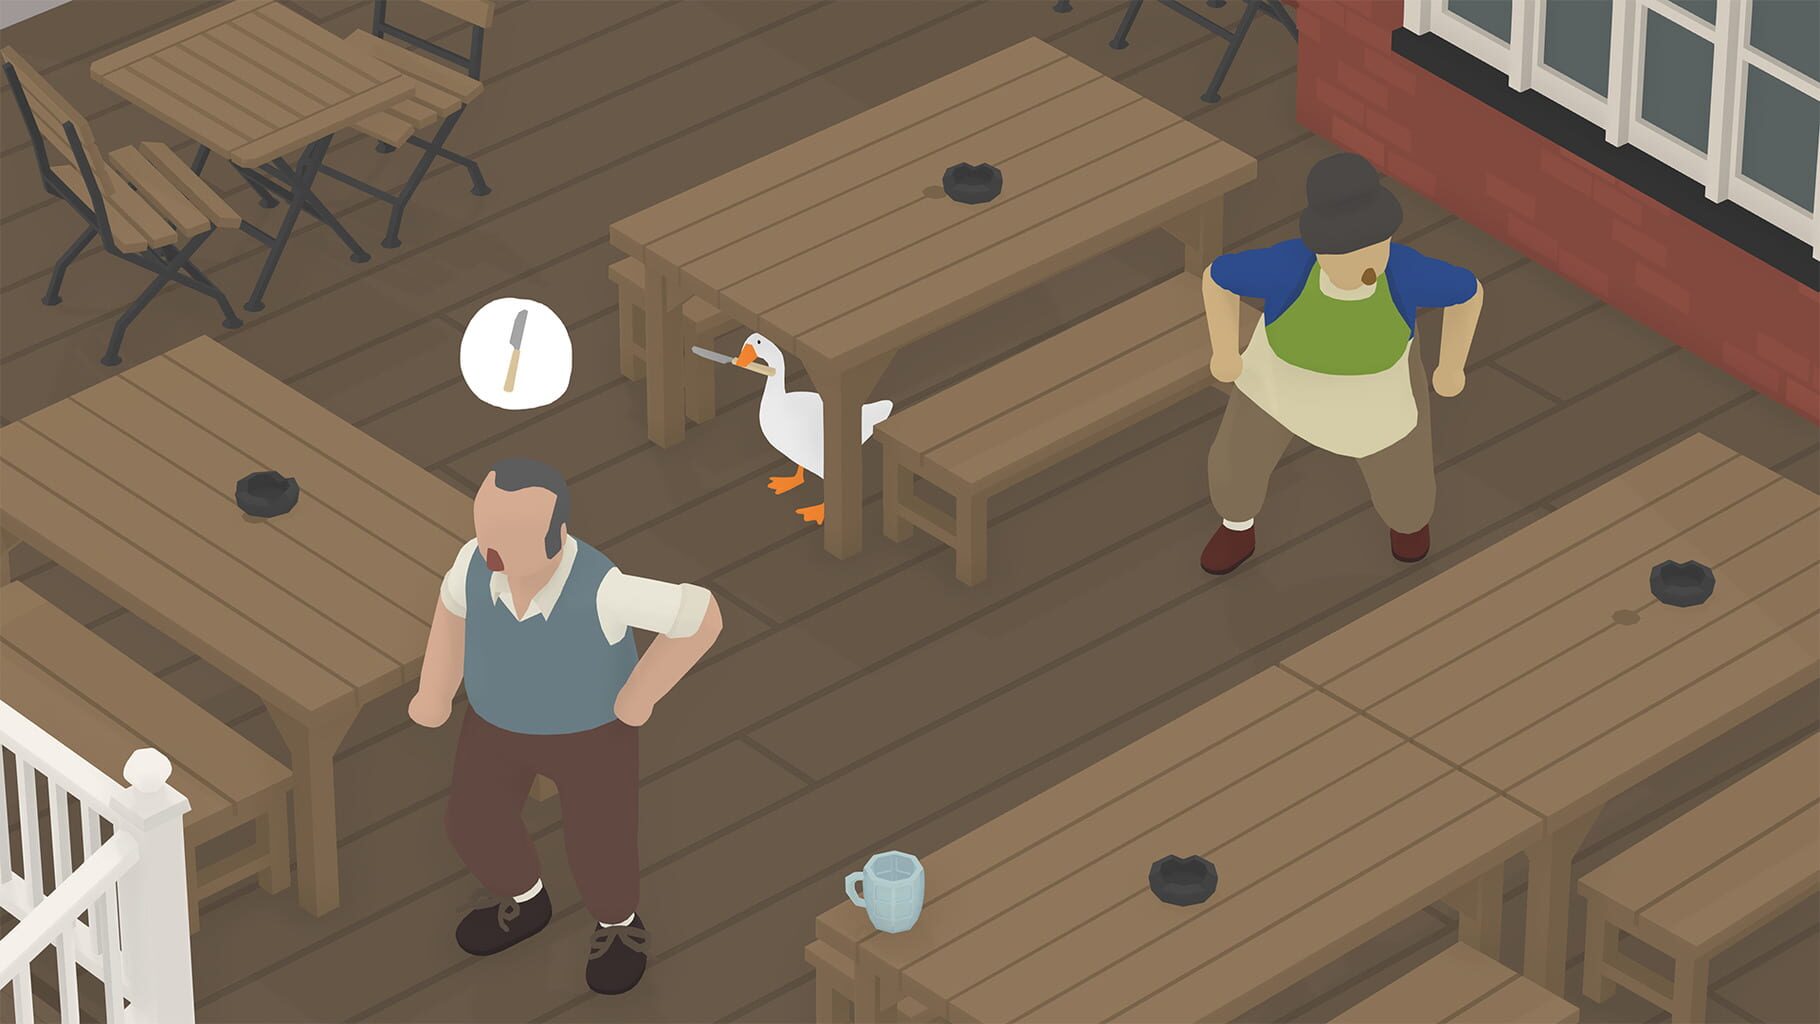 Untitled Goose Game screenshots